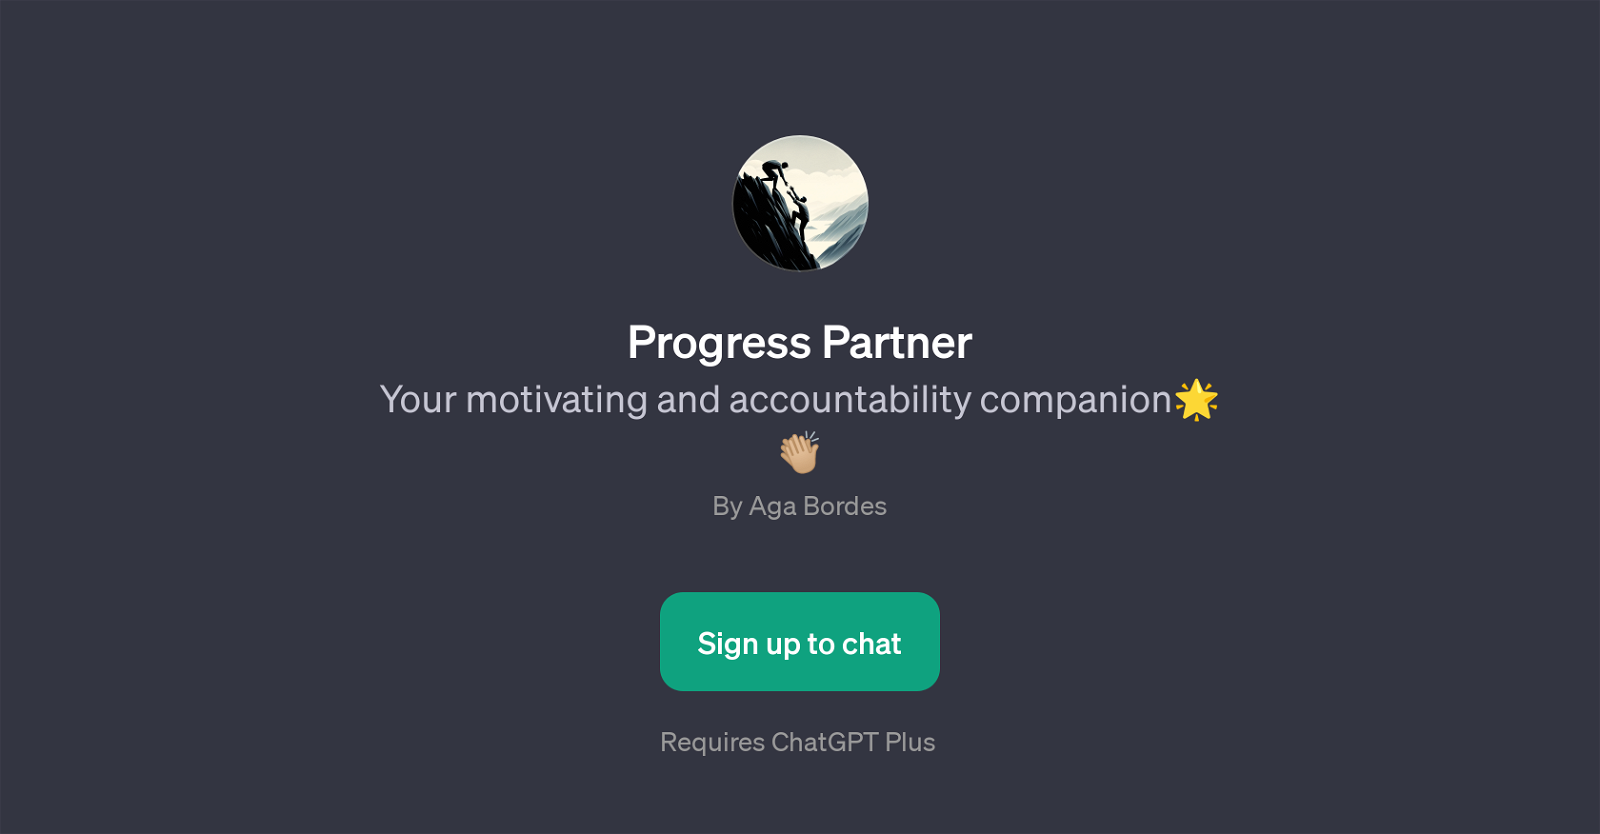 Progress Partner website